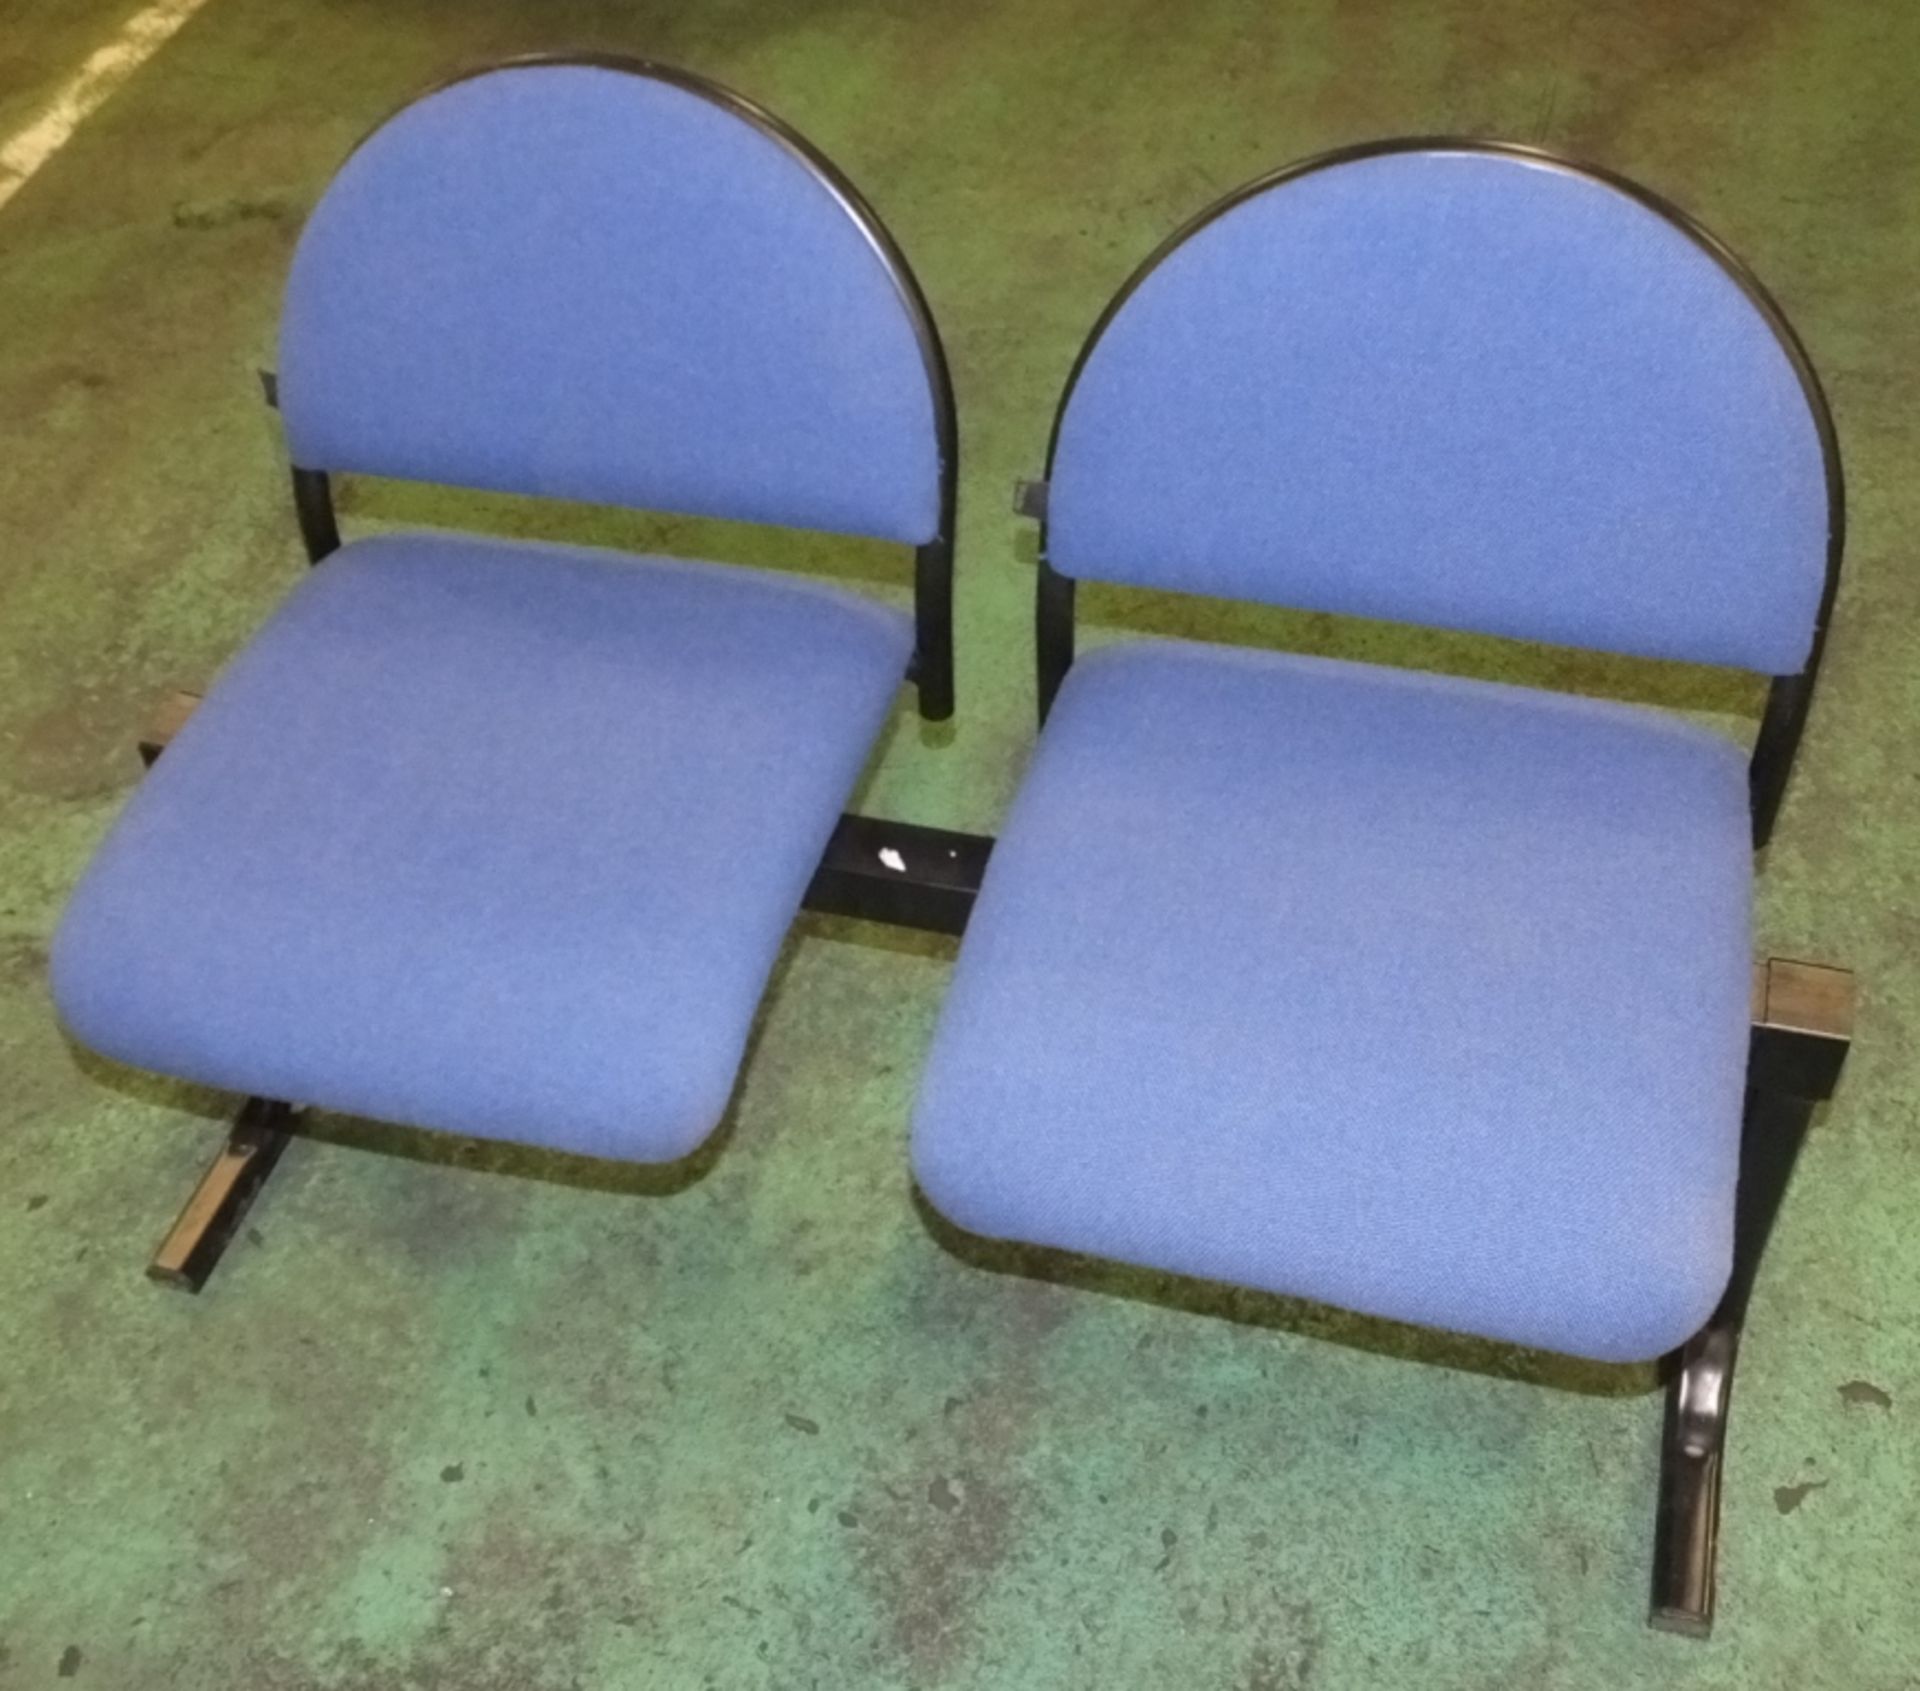 2 seater modular chair - blue